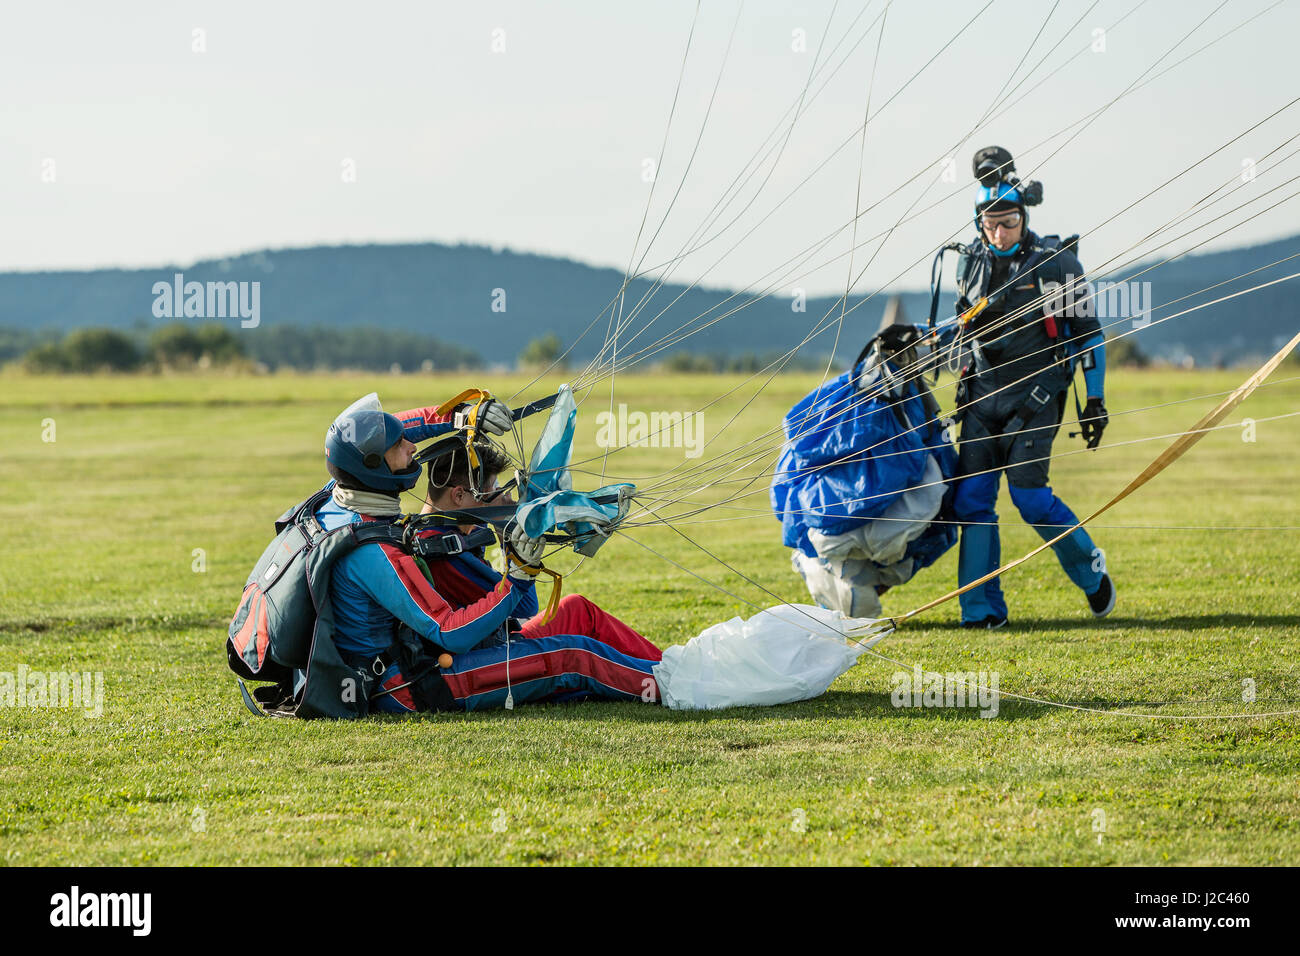 Pribram, CZE - August 19, 2016. Tandem red paraglider landing on grass in Pribram airport, Czech Republic Stock Photo